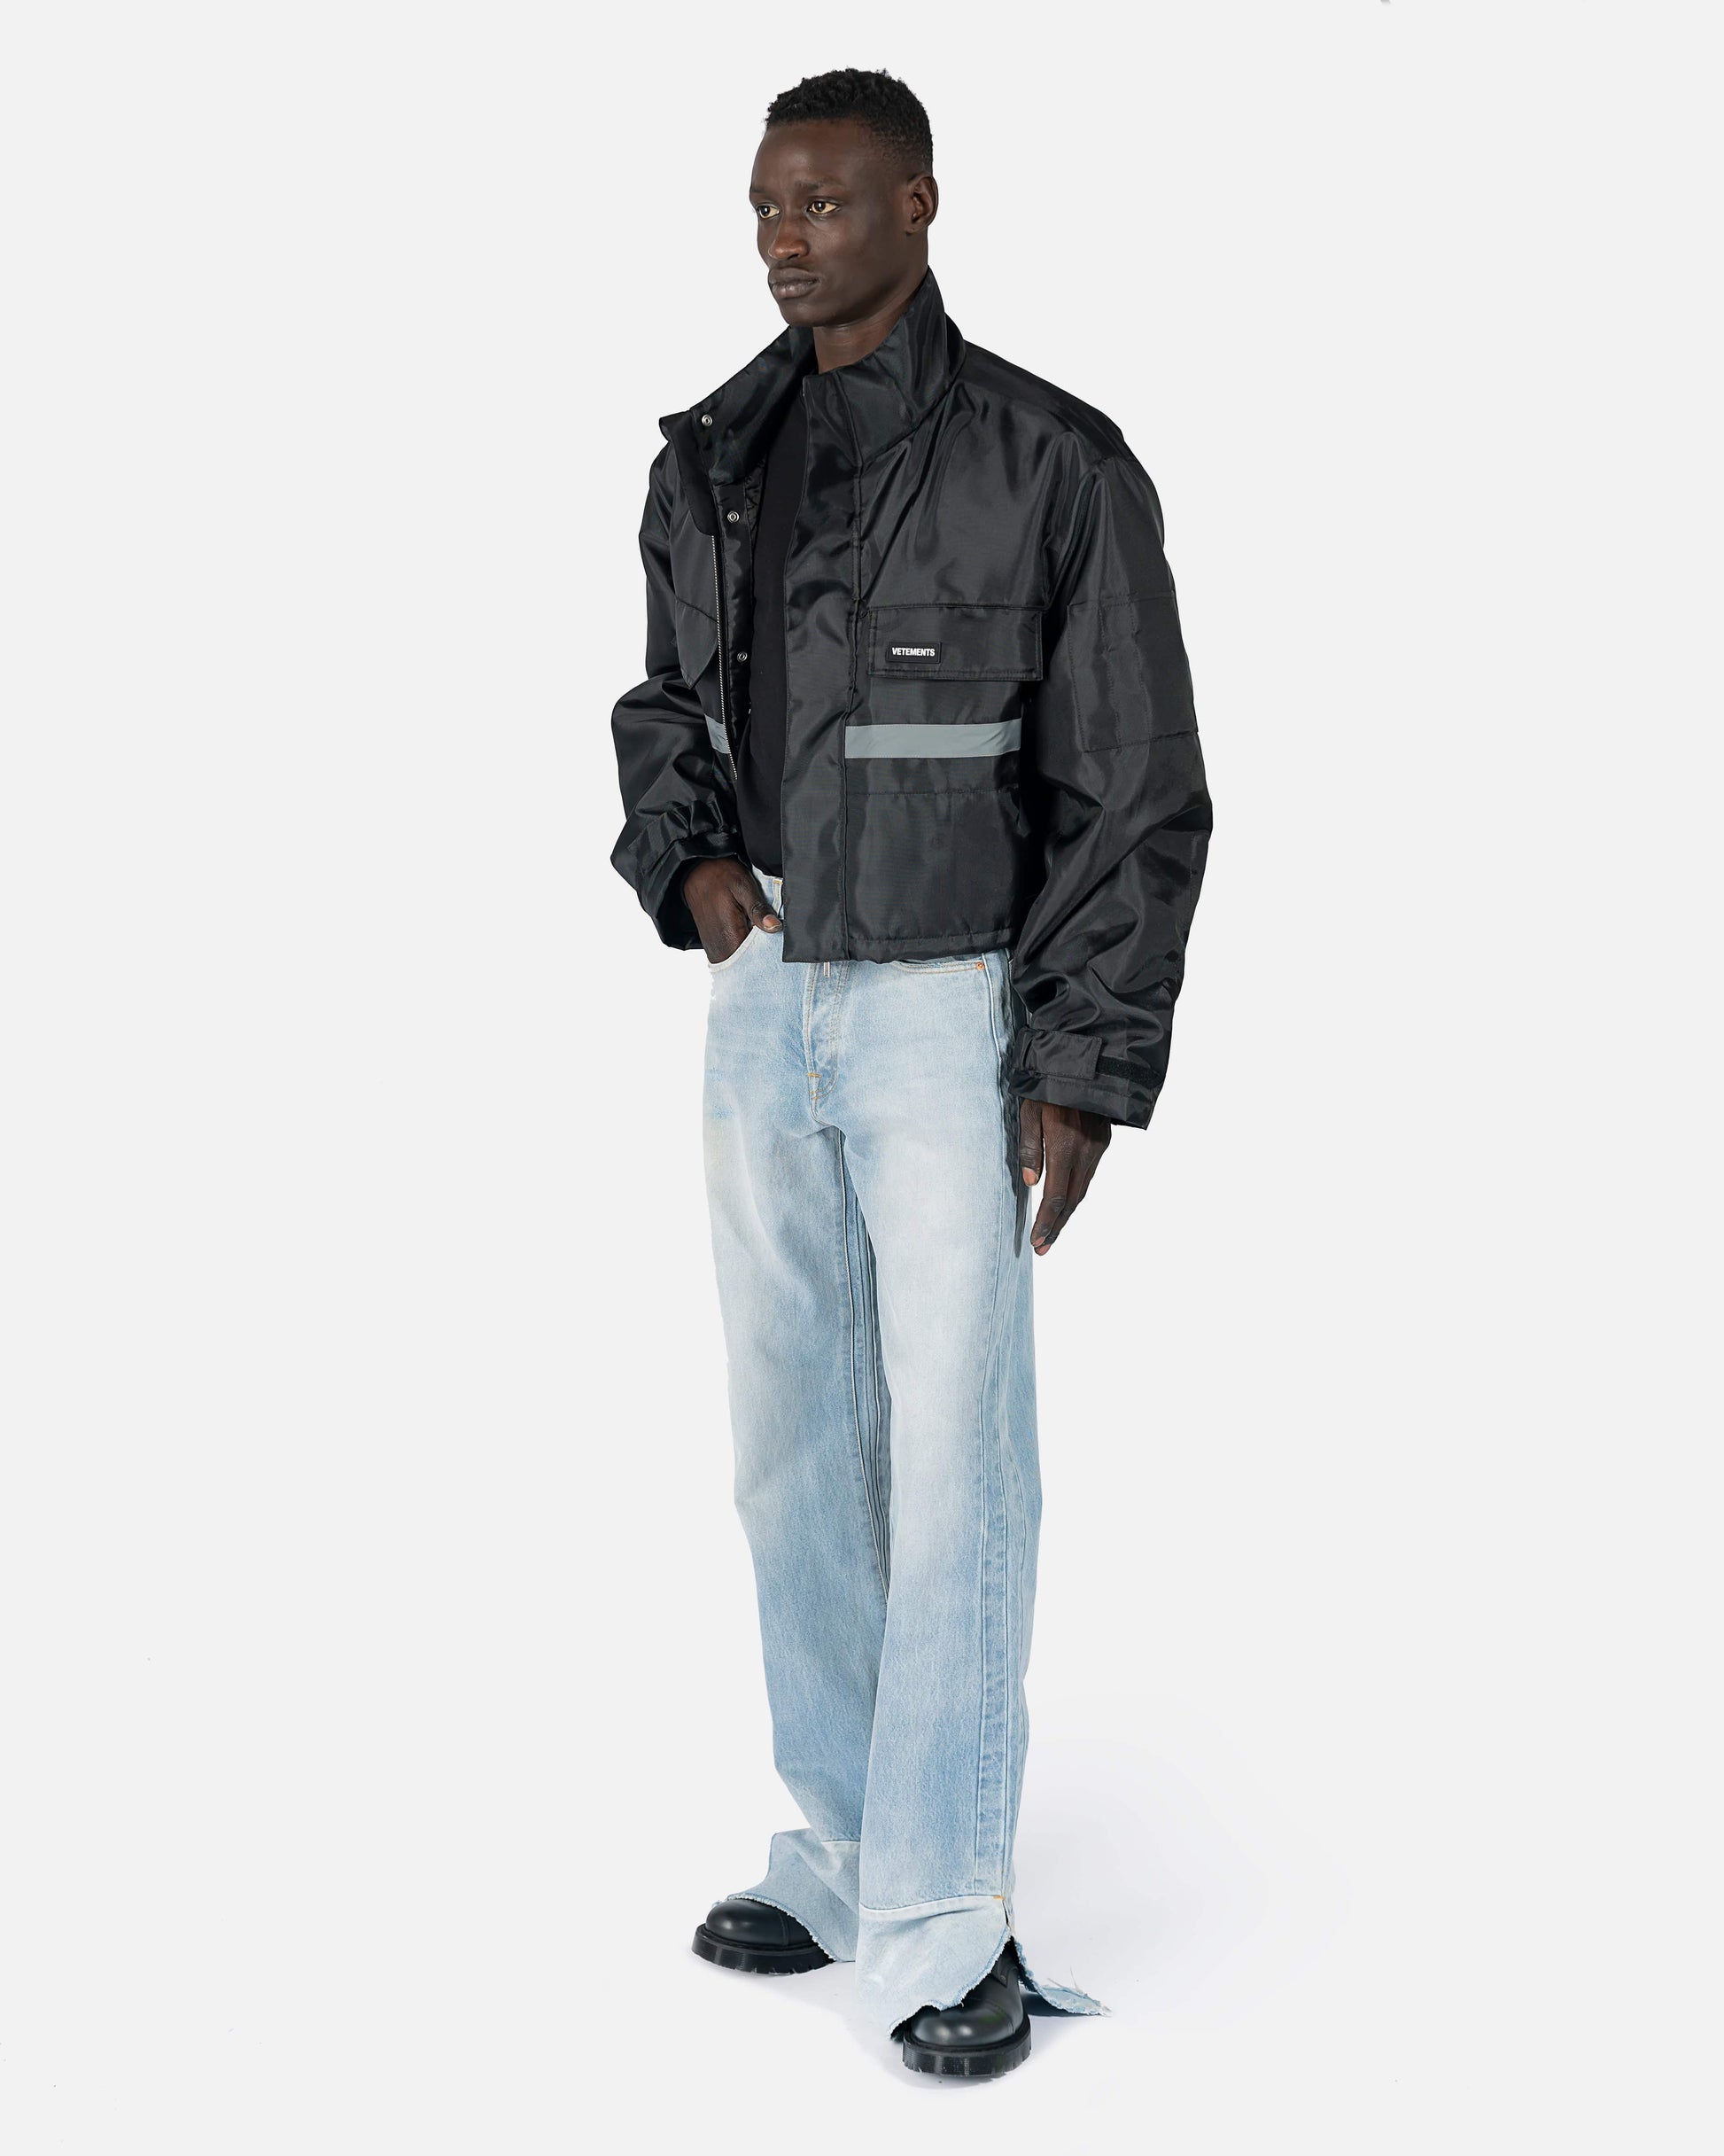 VETEMENTS Men's Jackets Cropped Reflective Parka in Black